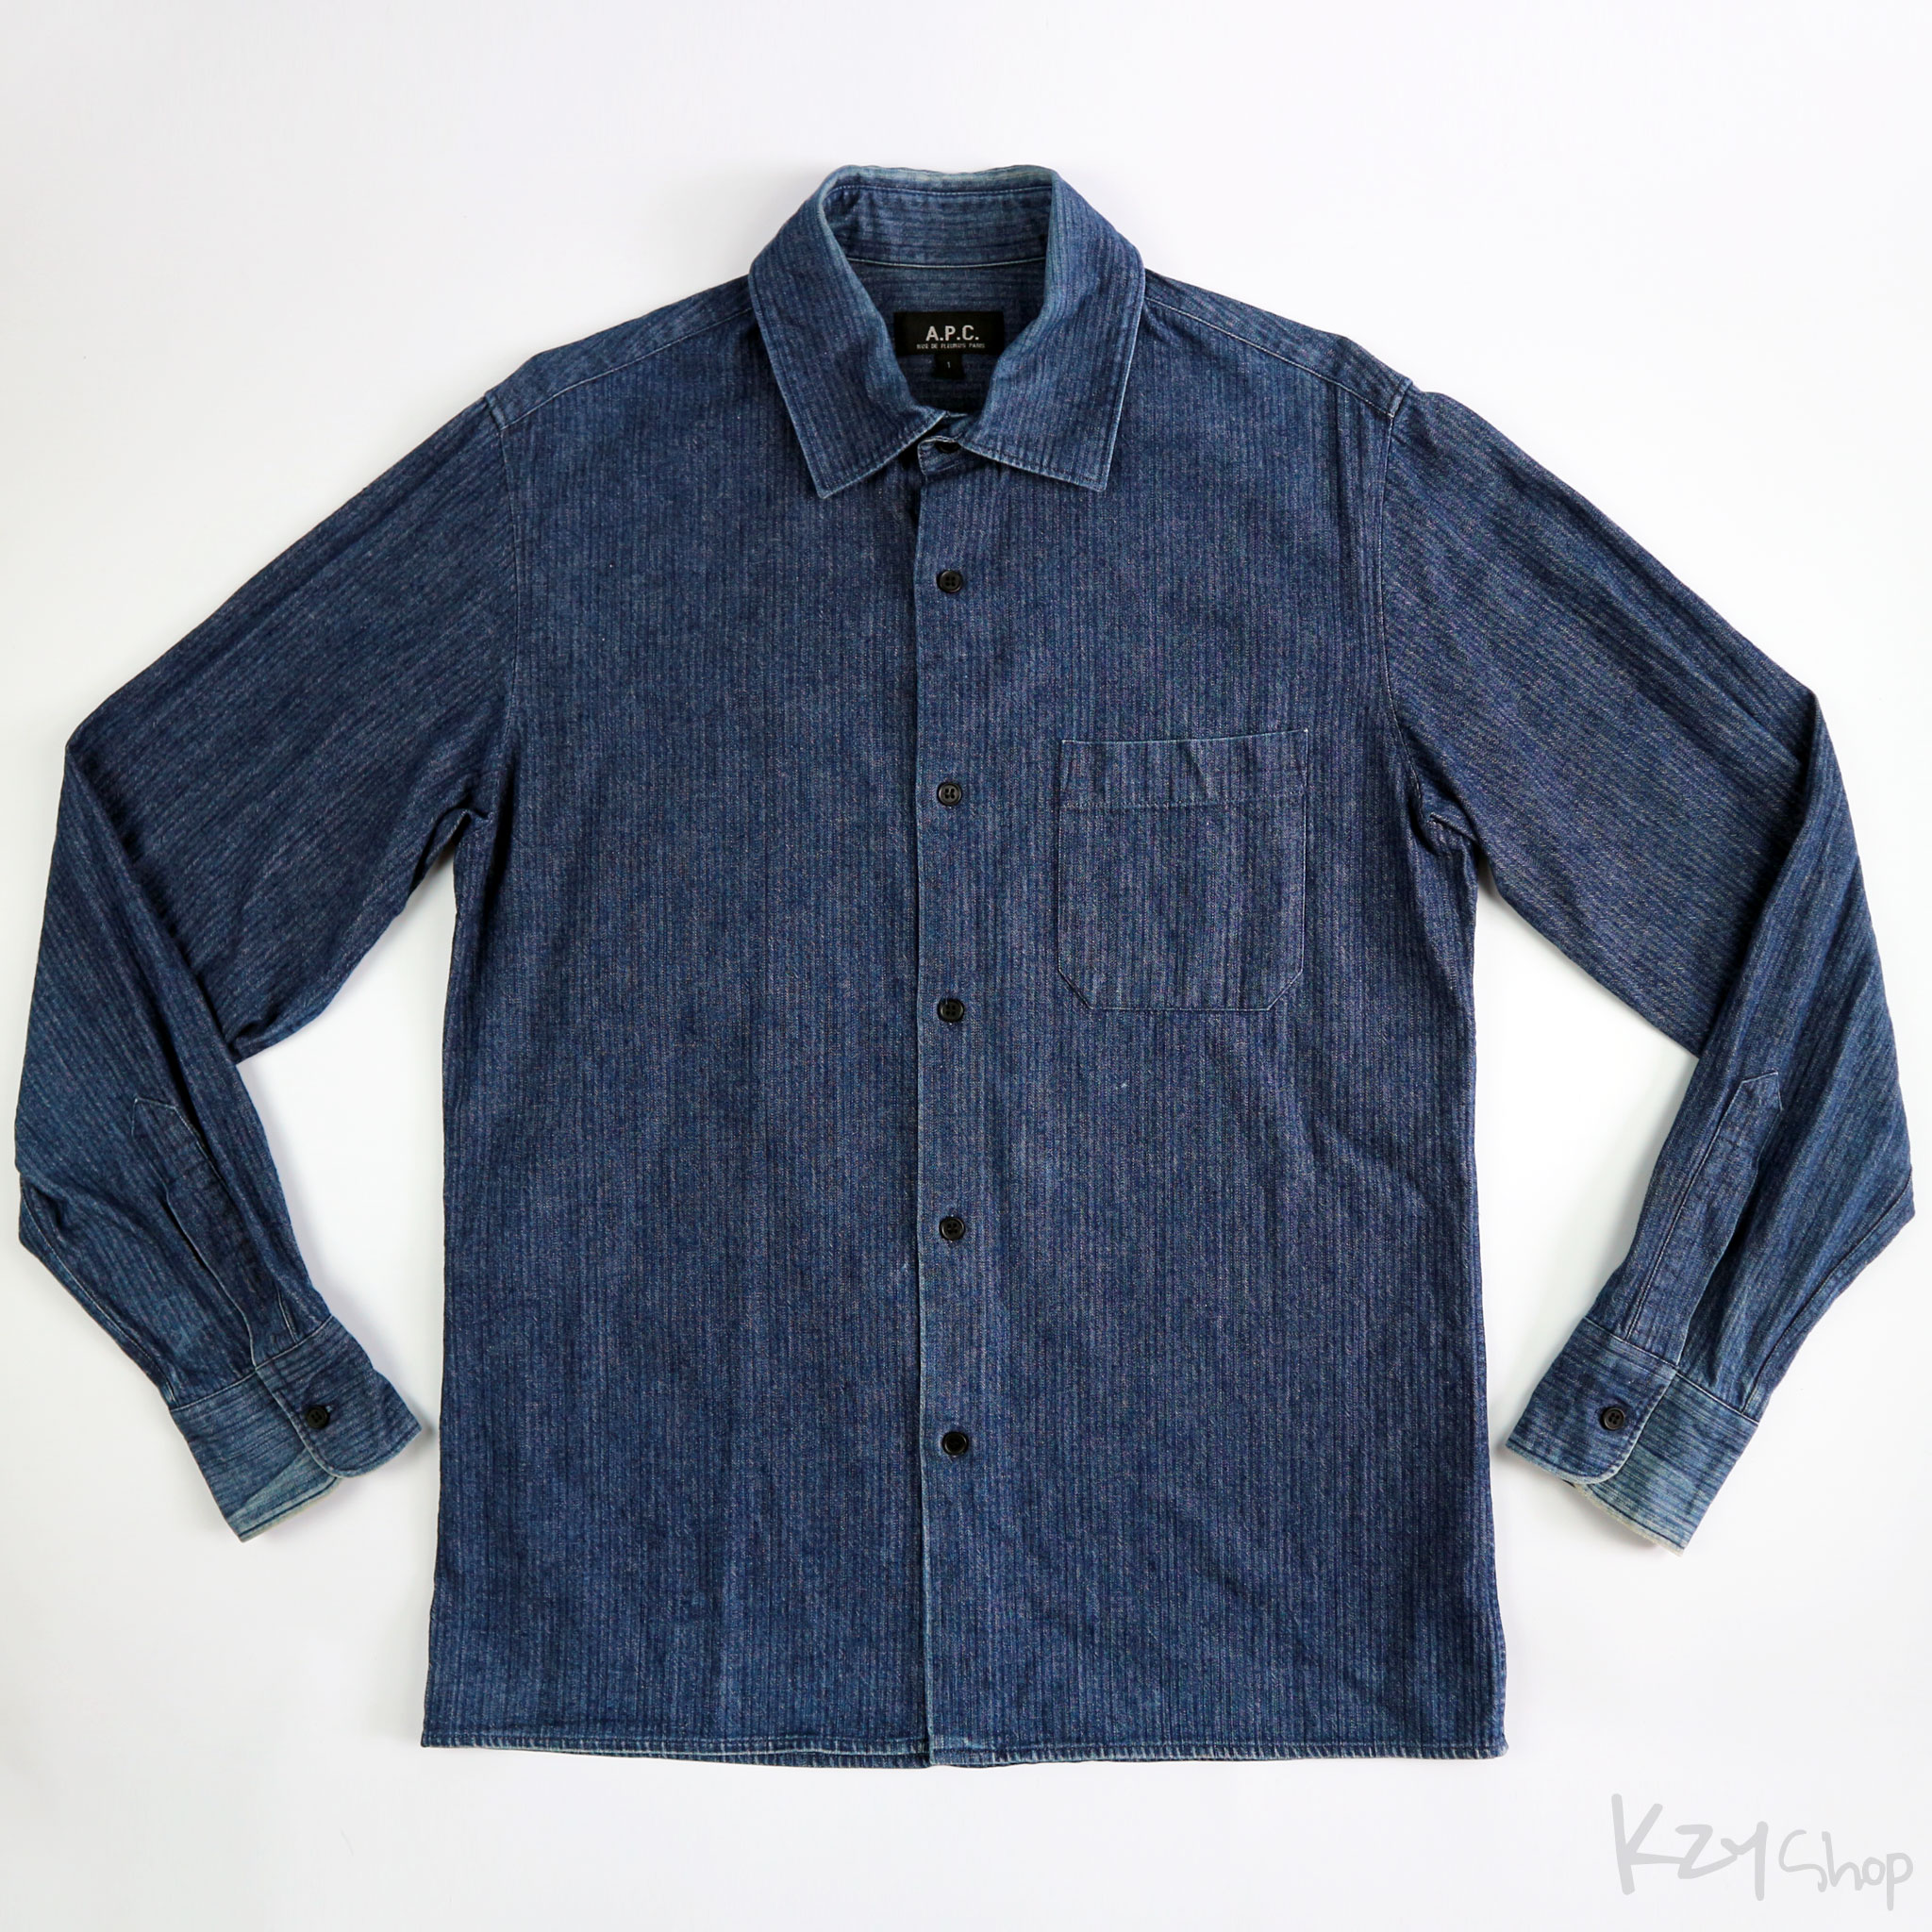 A.P.C. – Long Sleeve Shirt